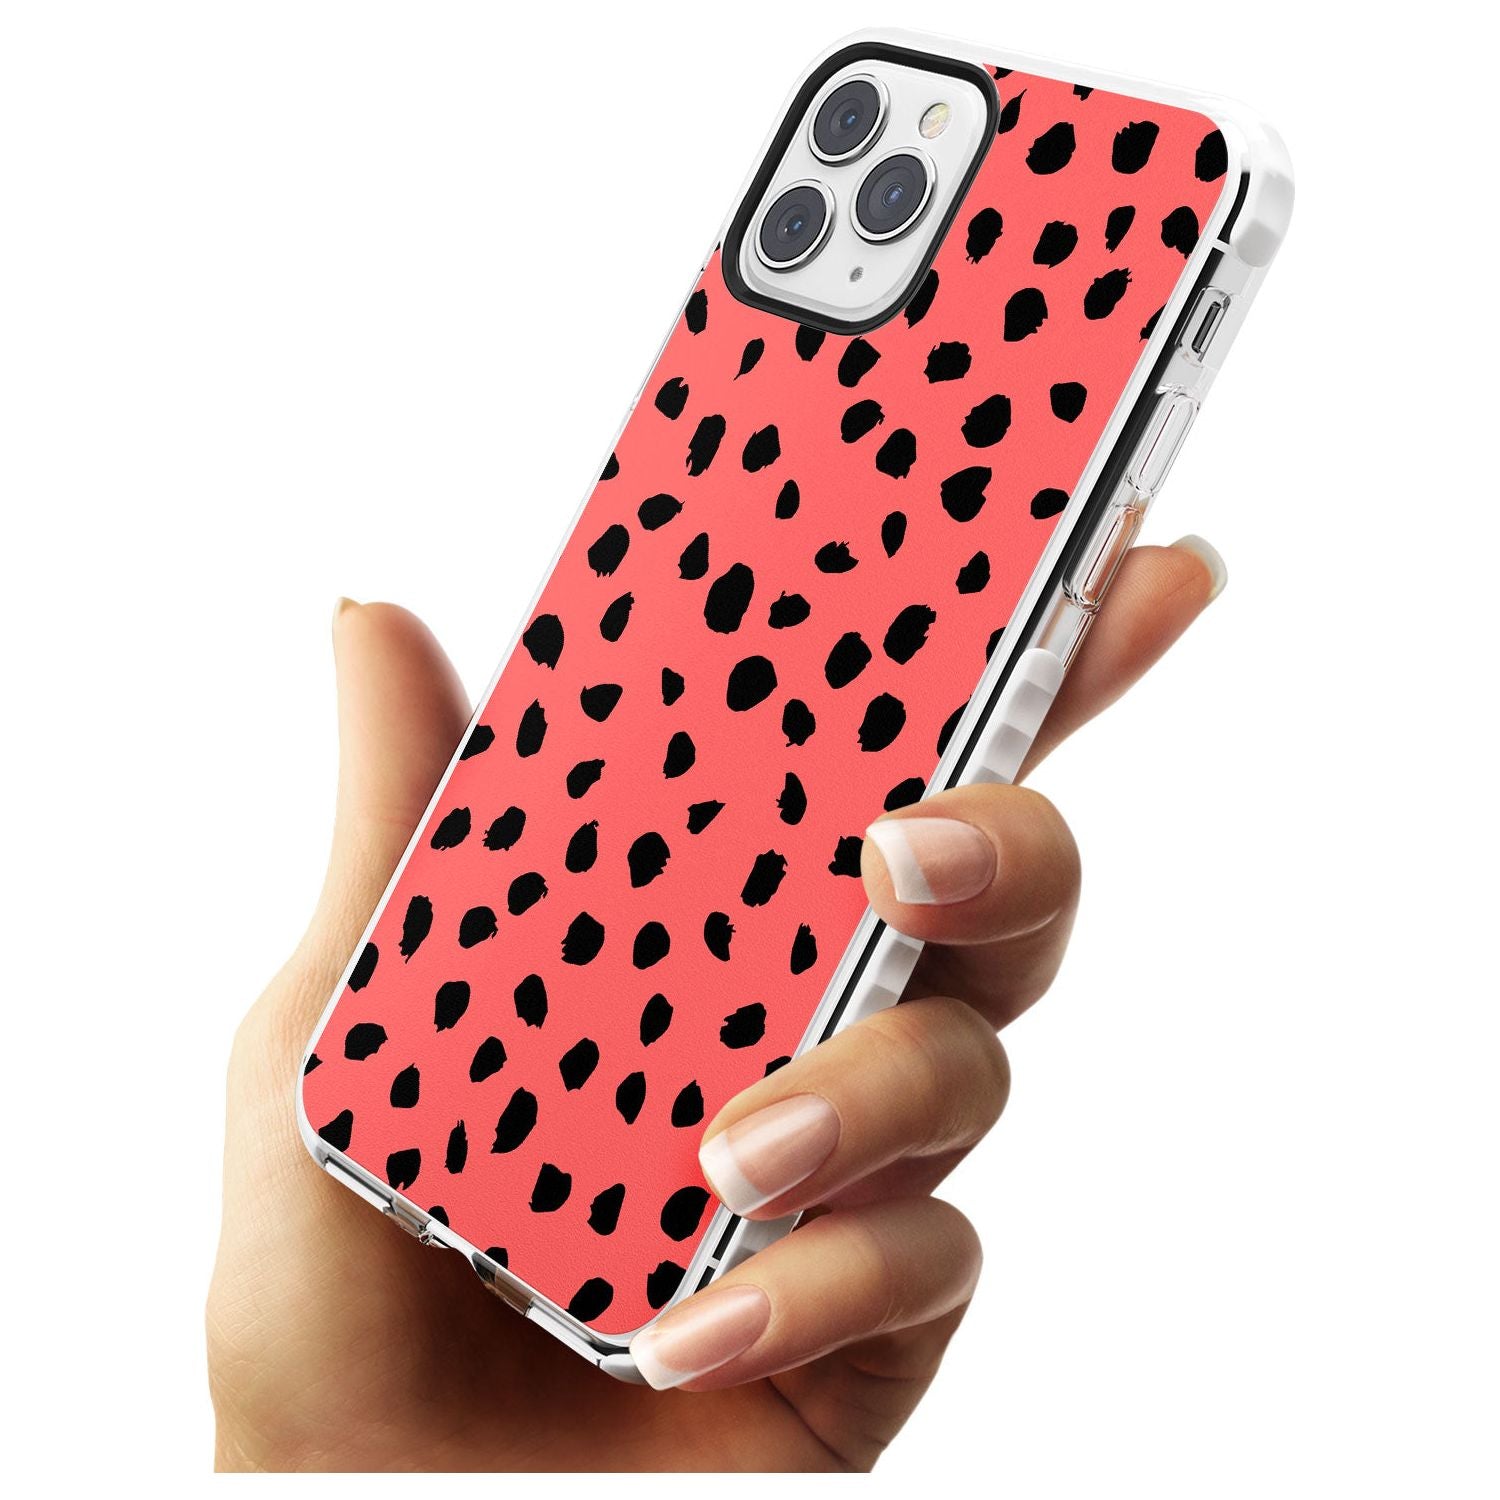 Black on Salmon Pink Dalmatian Polka Dot Spots Impact Phone Case for iPhone 11 Pro Max